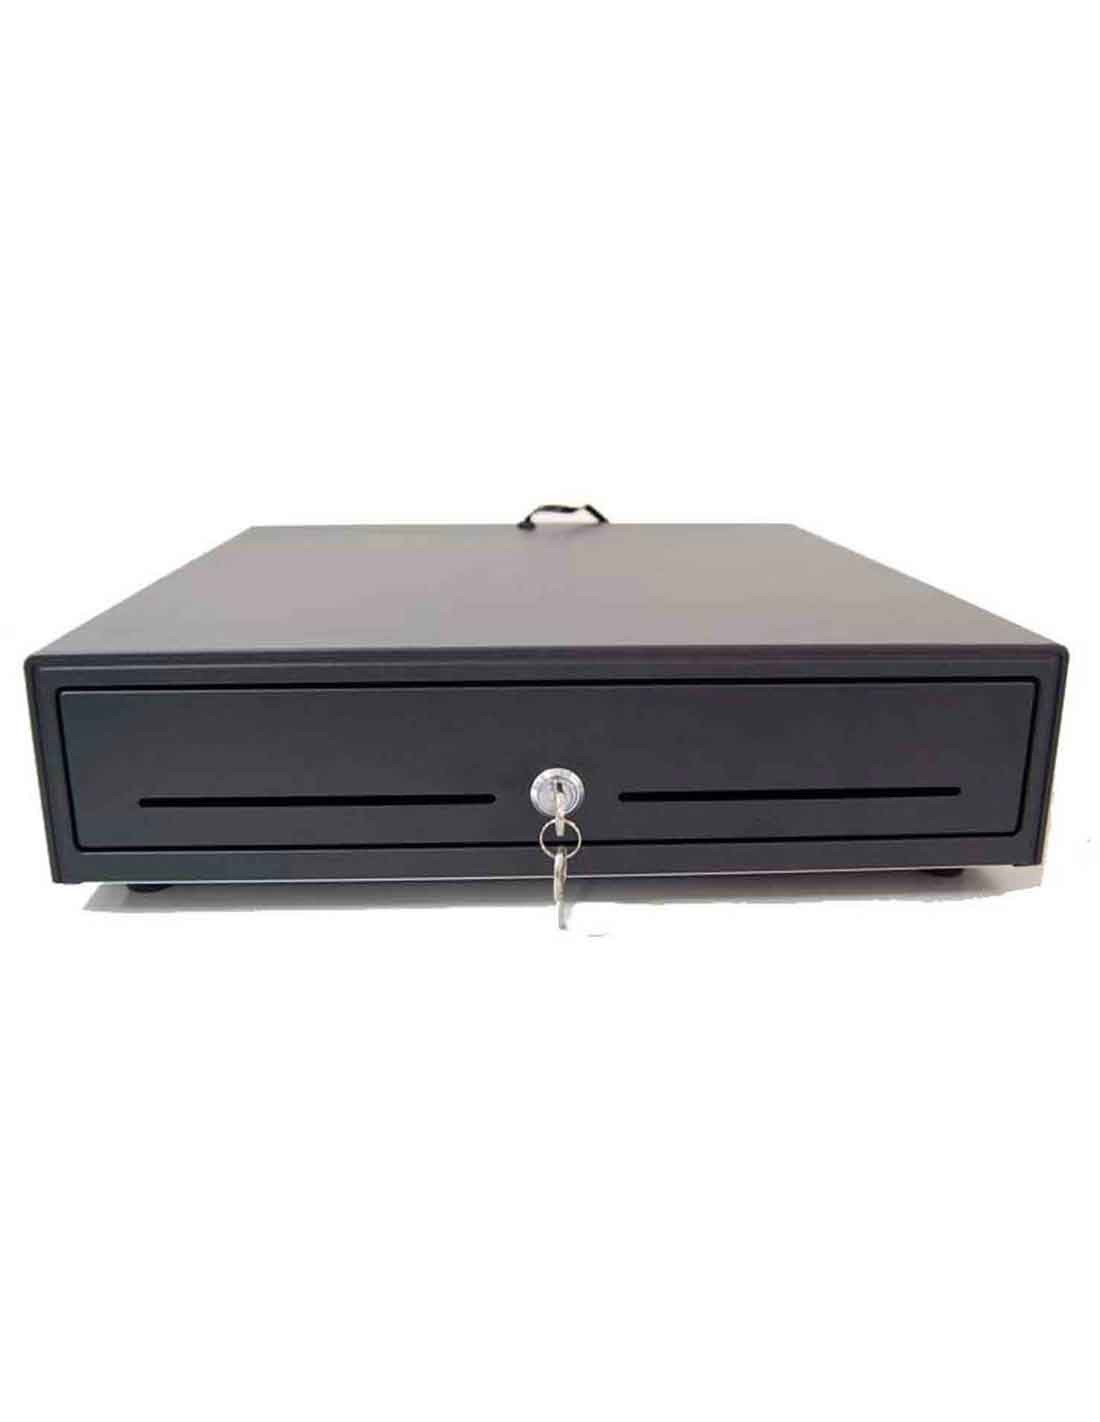 Pozone PCD 4141 Black Cash Drawer at a cheap price in Dubai